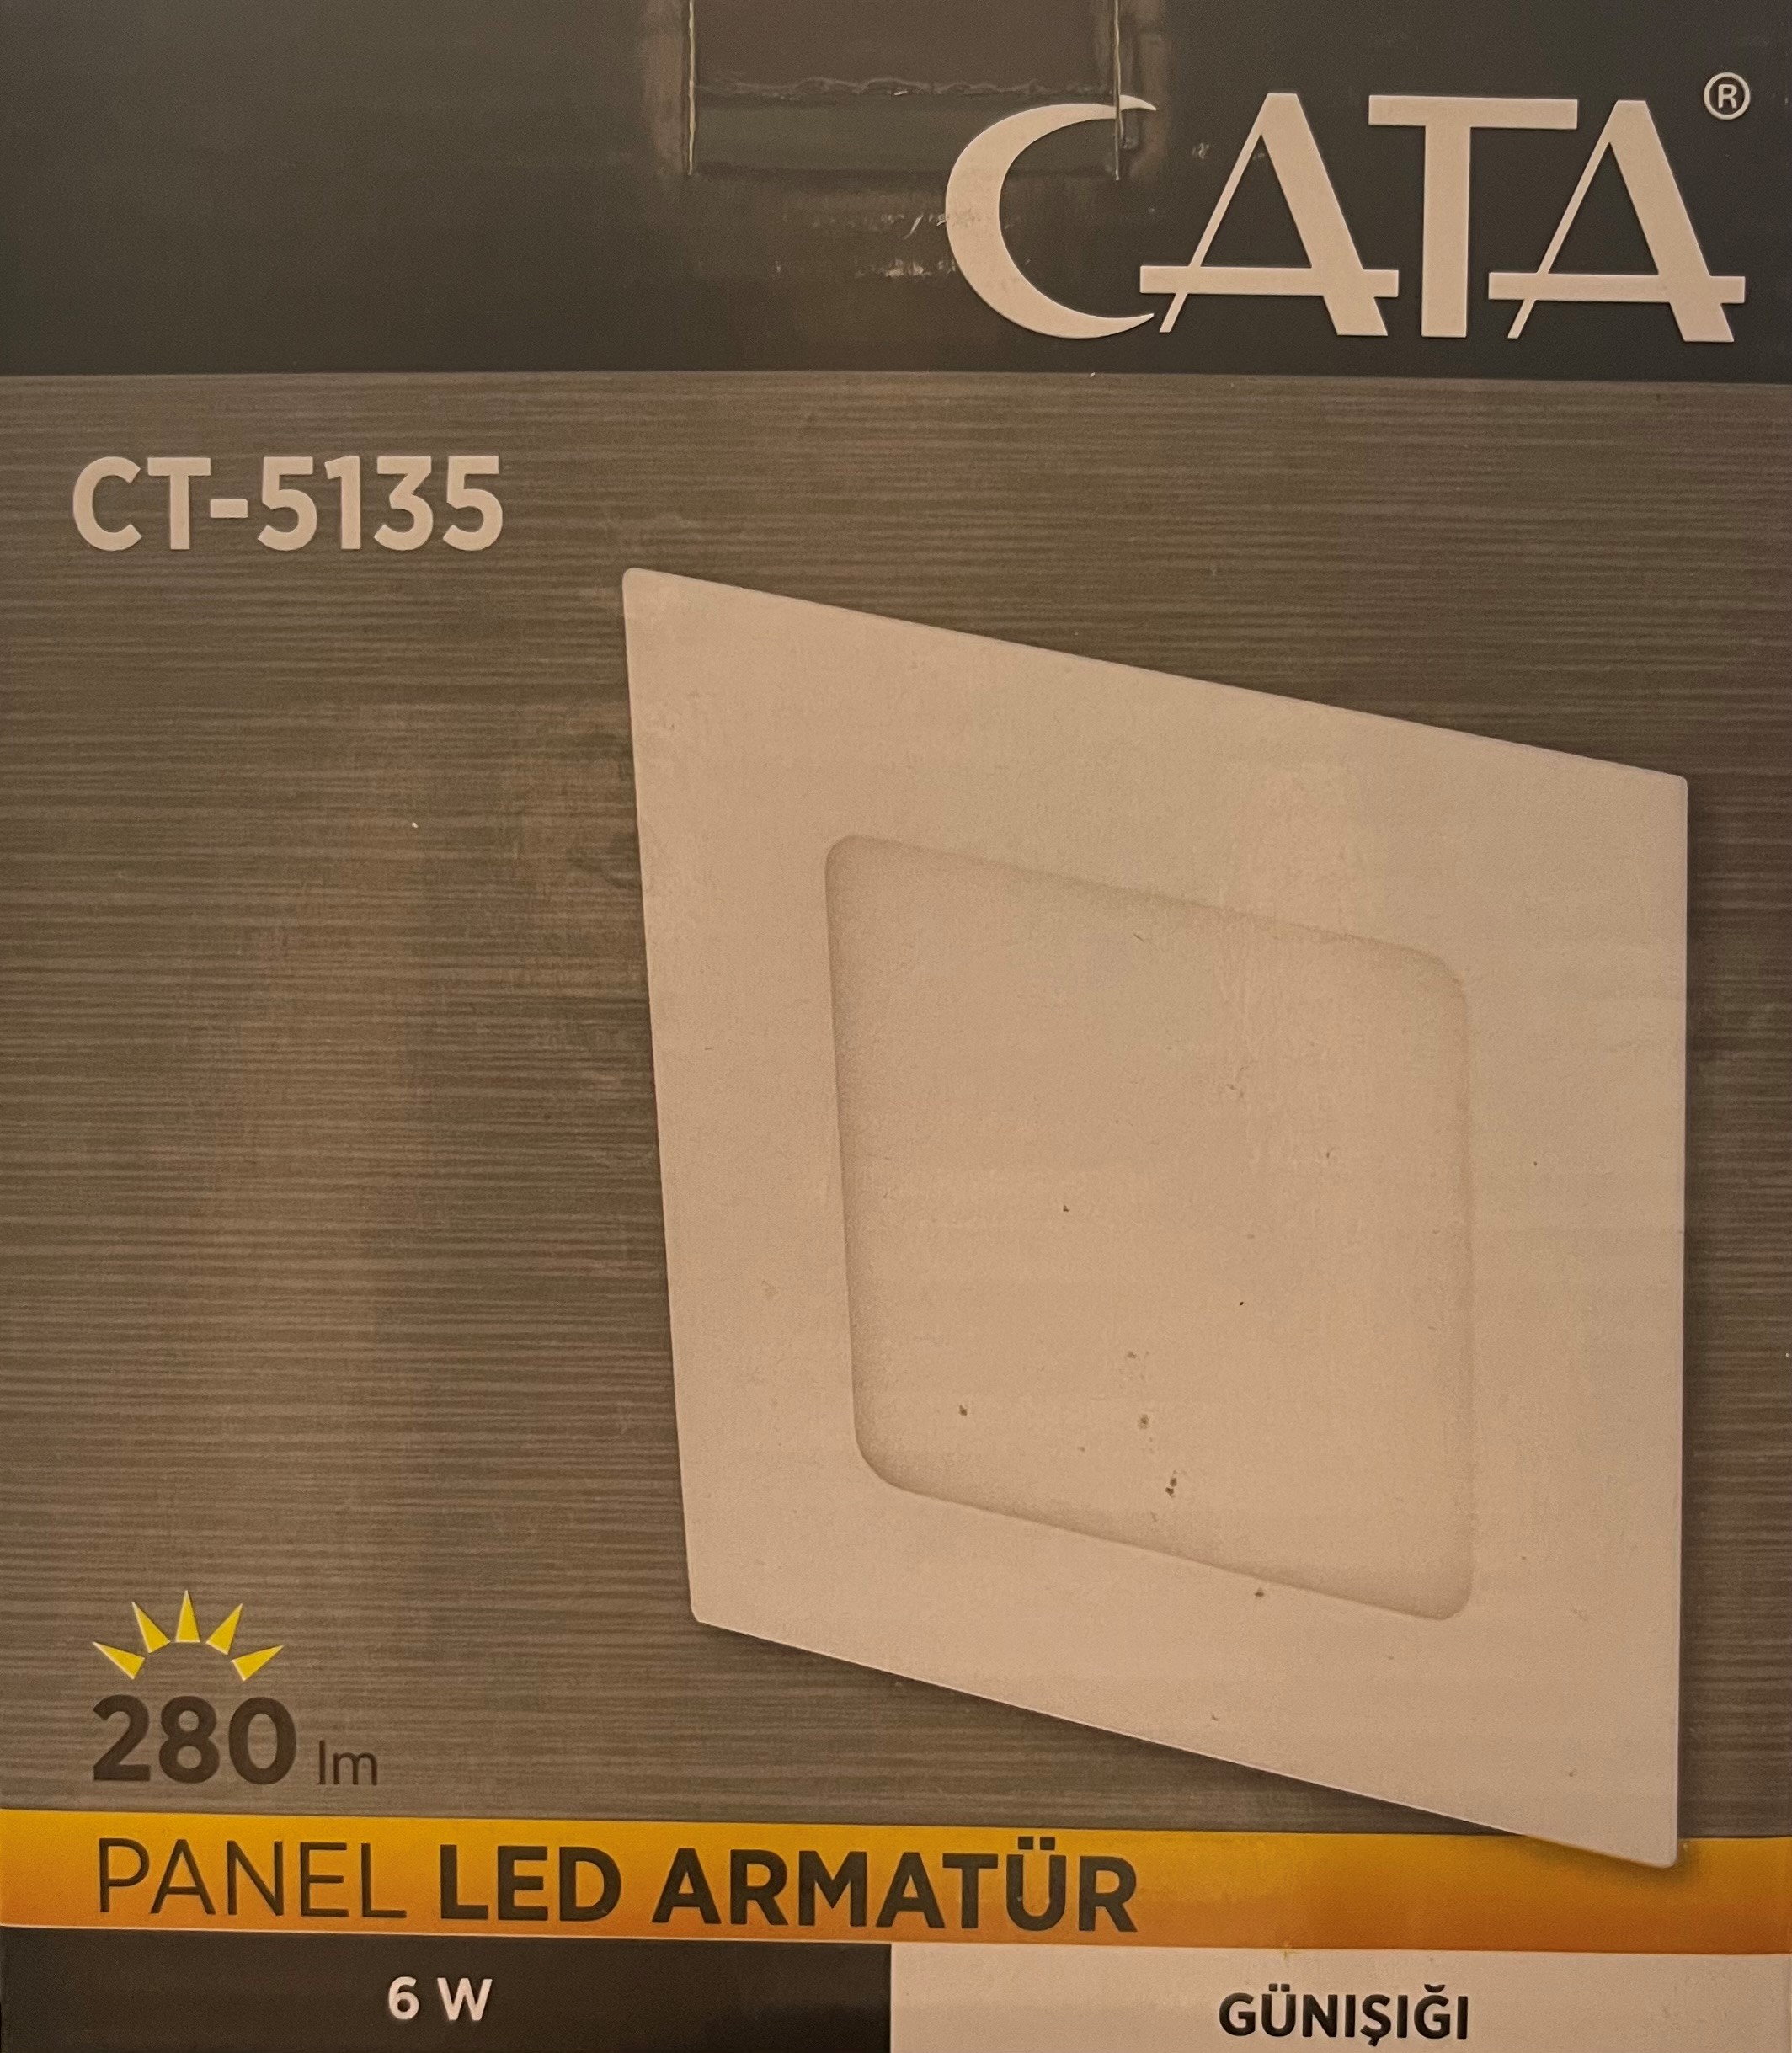 Cata Ct-5135 Panel Led Armatür 6W Günışığı